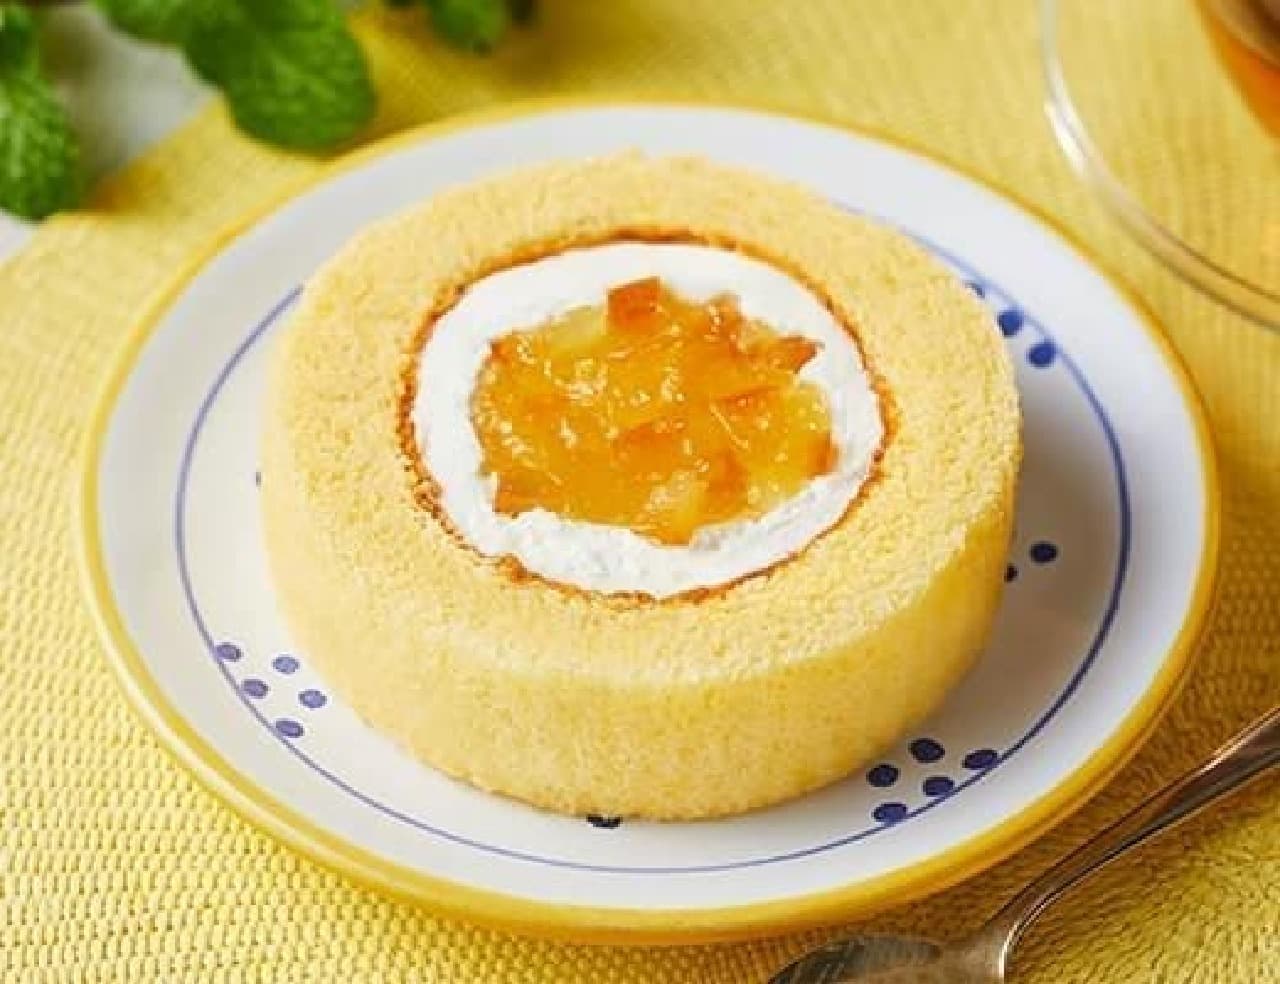 Lawson "Sweets Koshien Bankan Roll Cake"